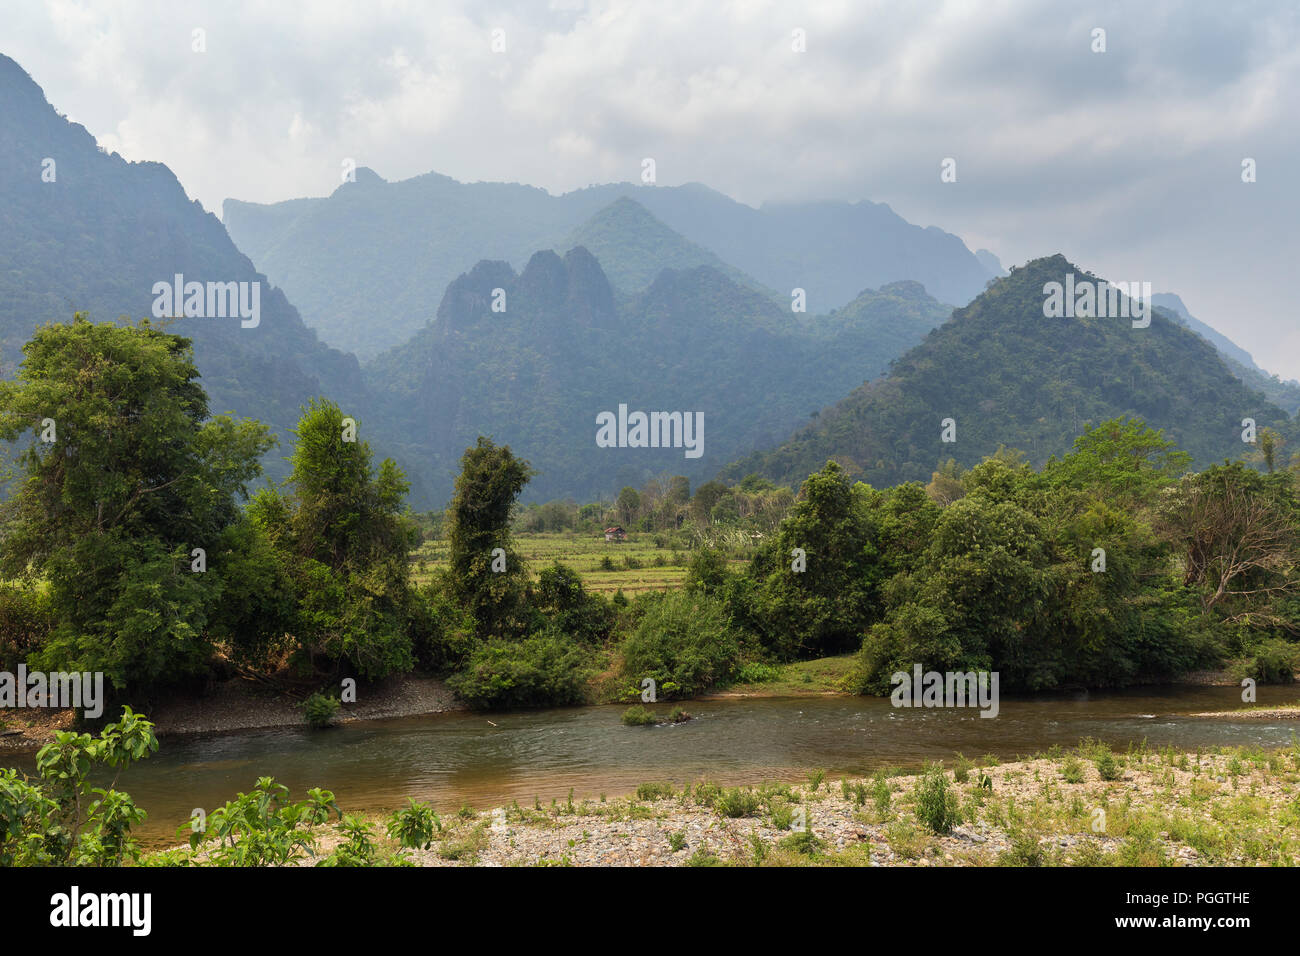 Vista panoramica di Nam Song River, campi e montagne calcaree nei pressi di Vang Vieng, Provincia di Vientiane, Laos. Foto Stock